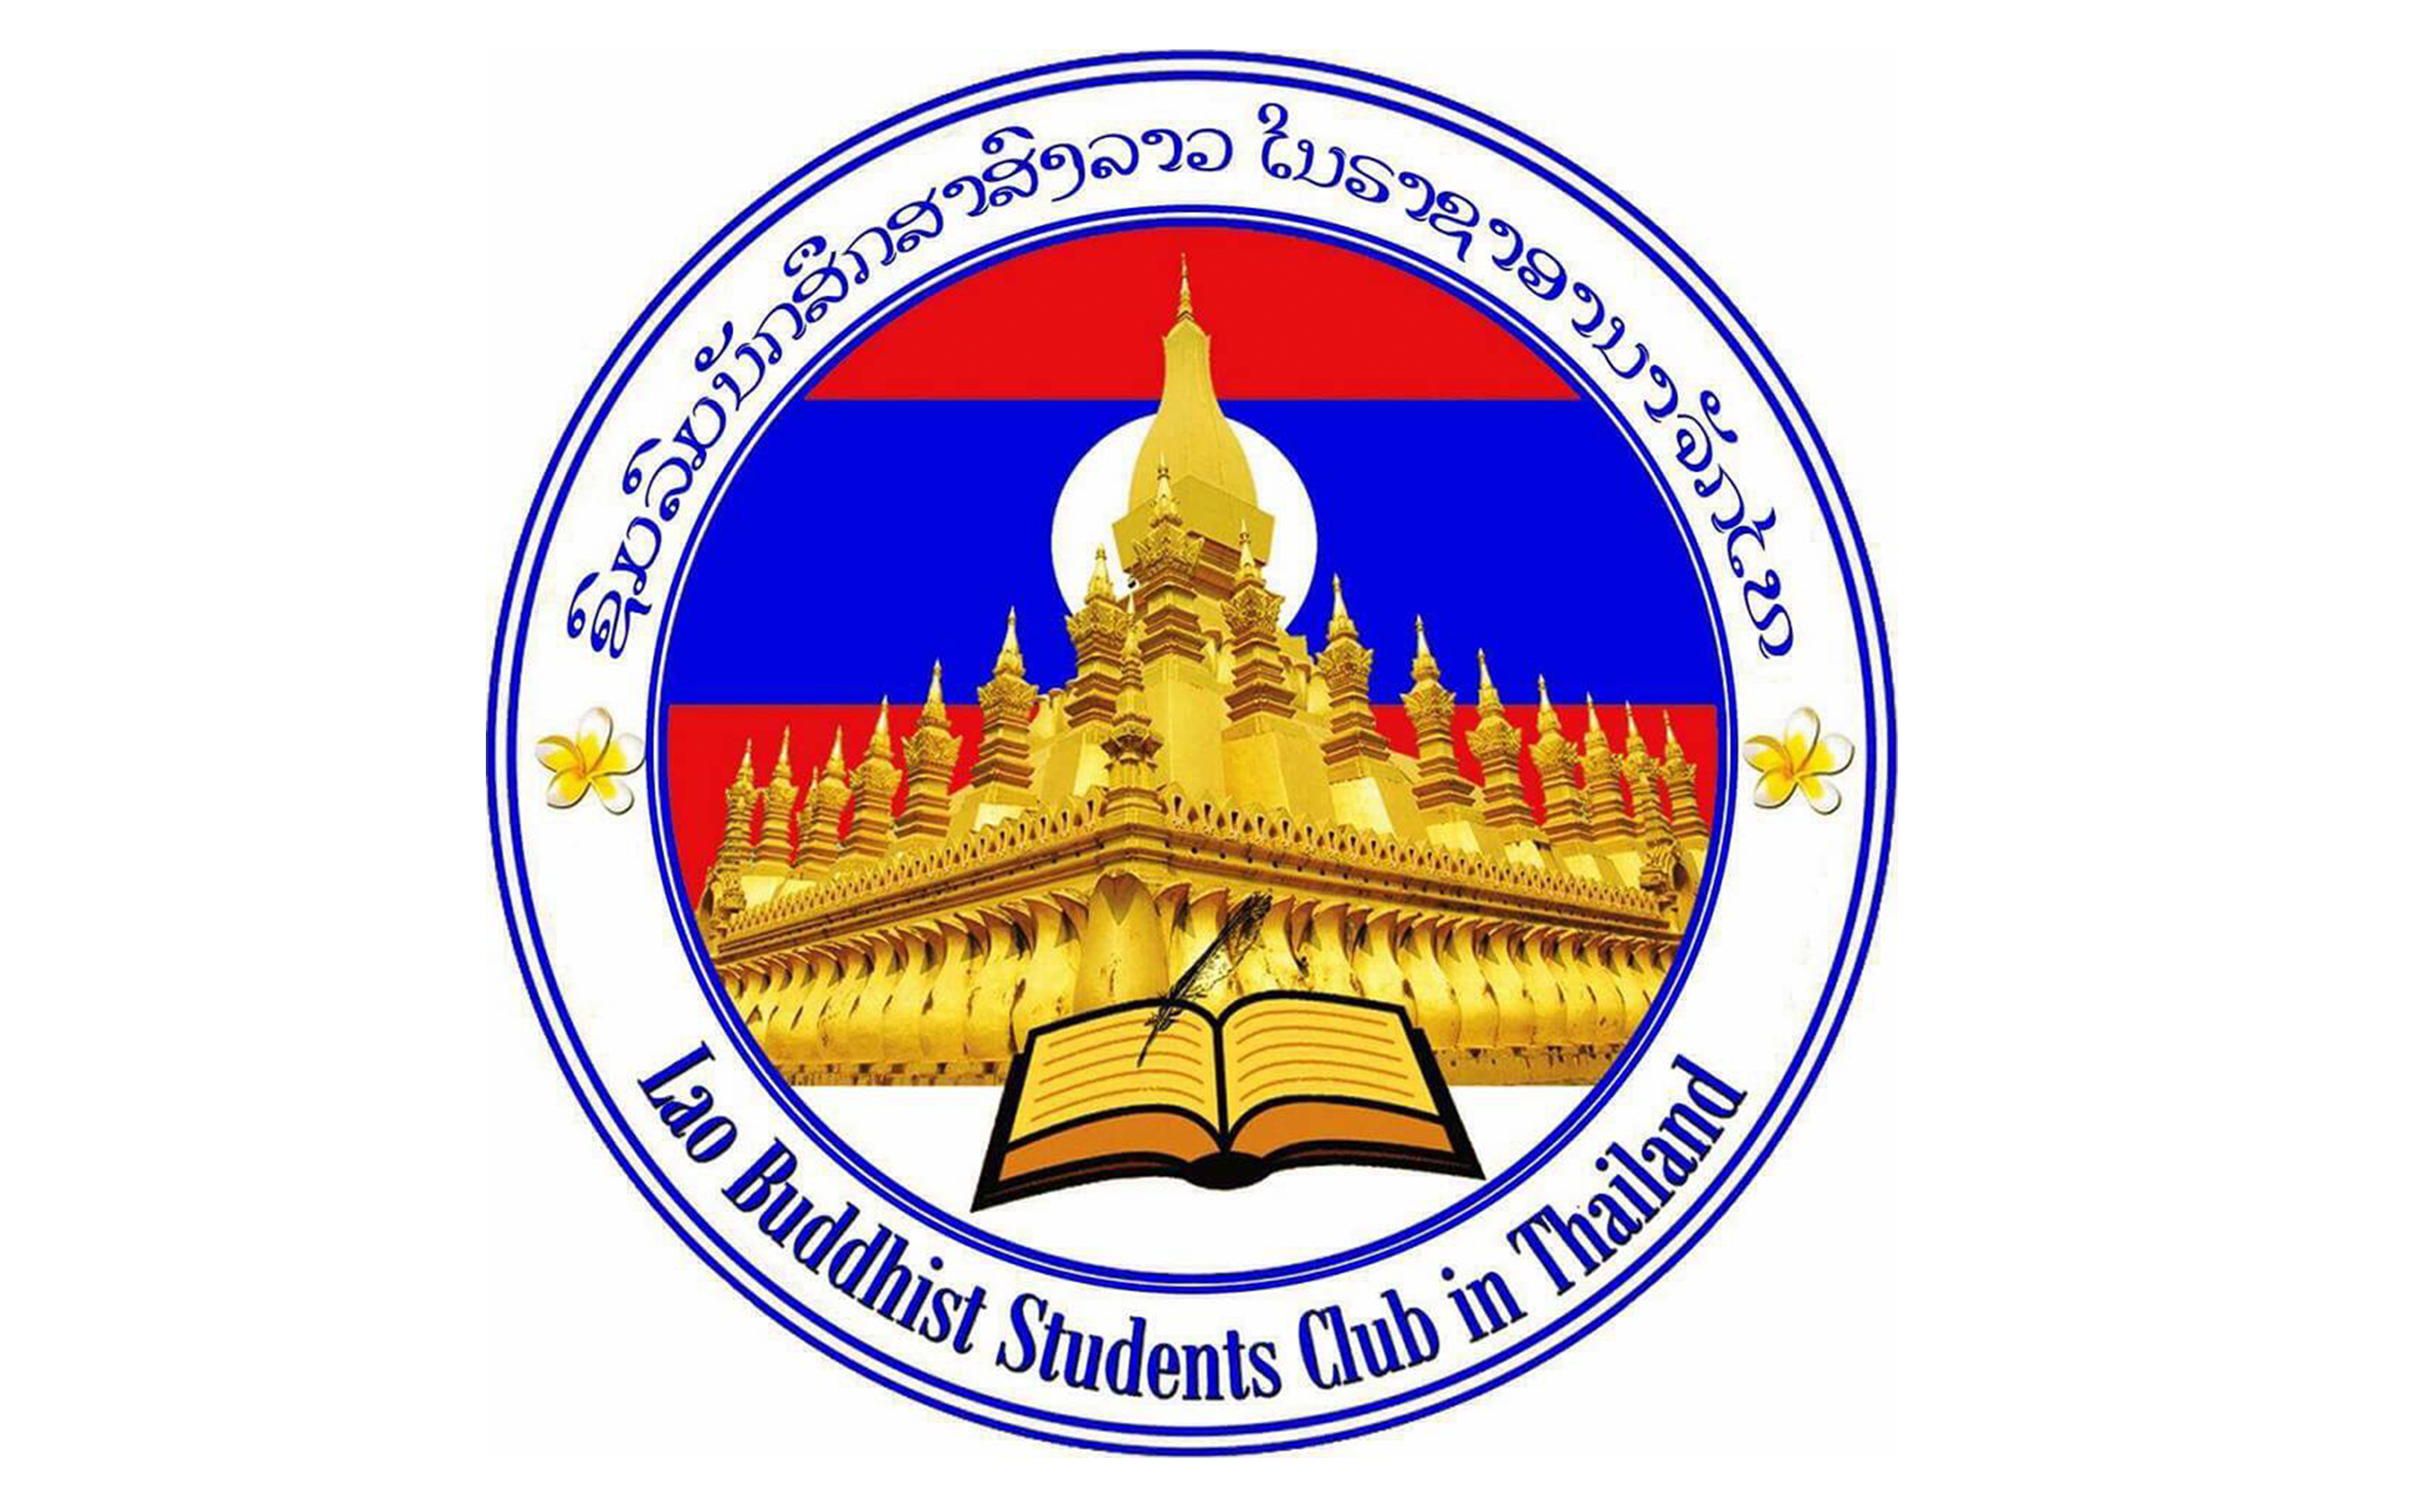 Lao Buddhist Student Club in Thailand